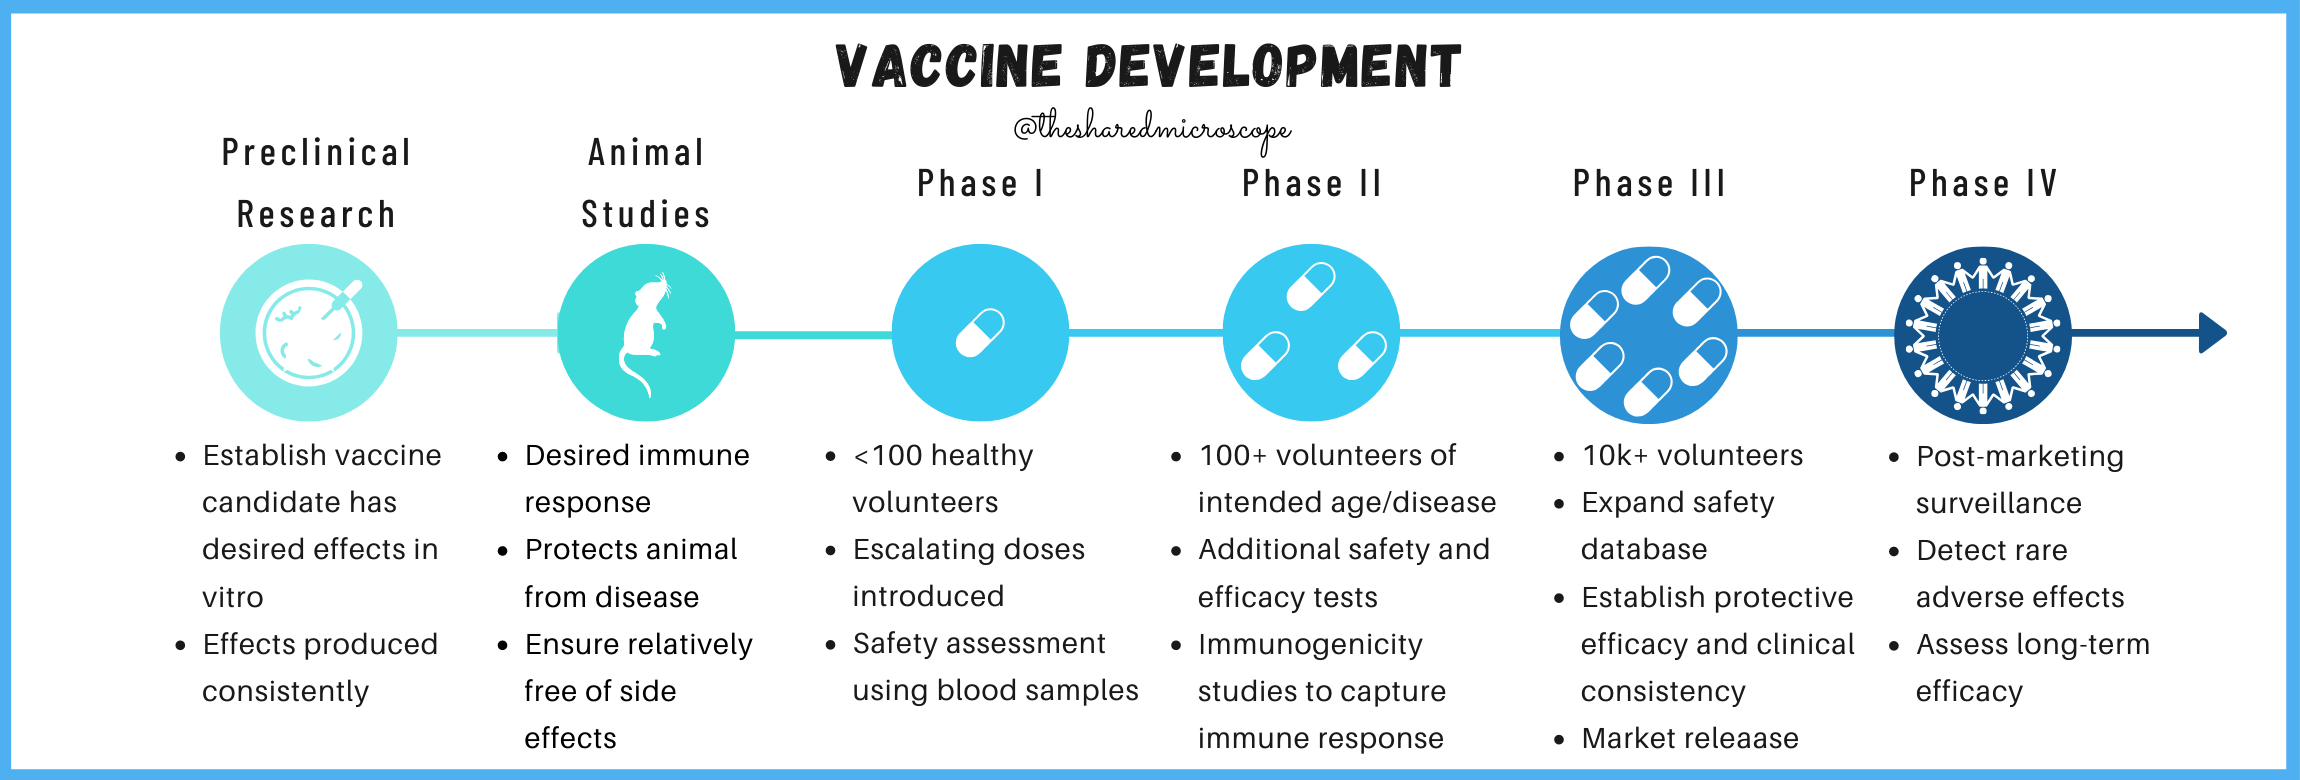 Vaccine Development, by